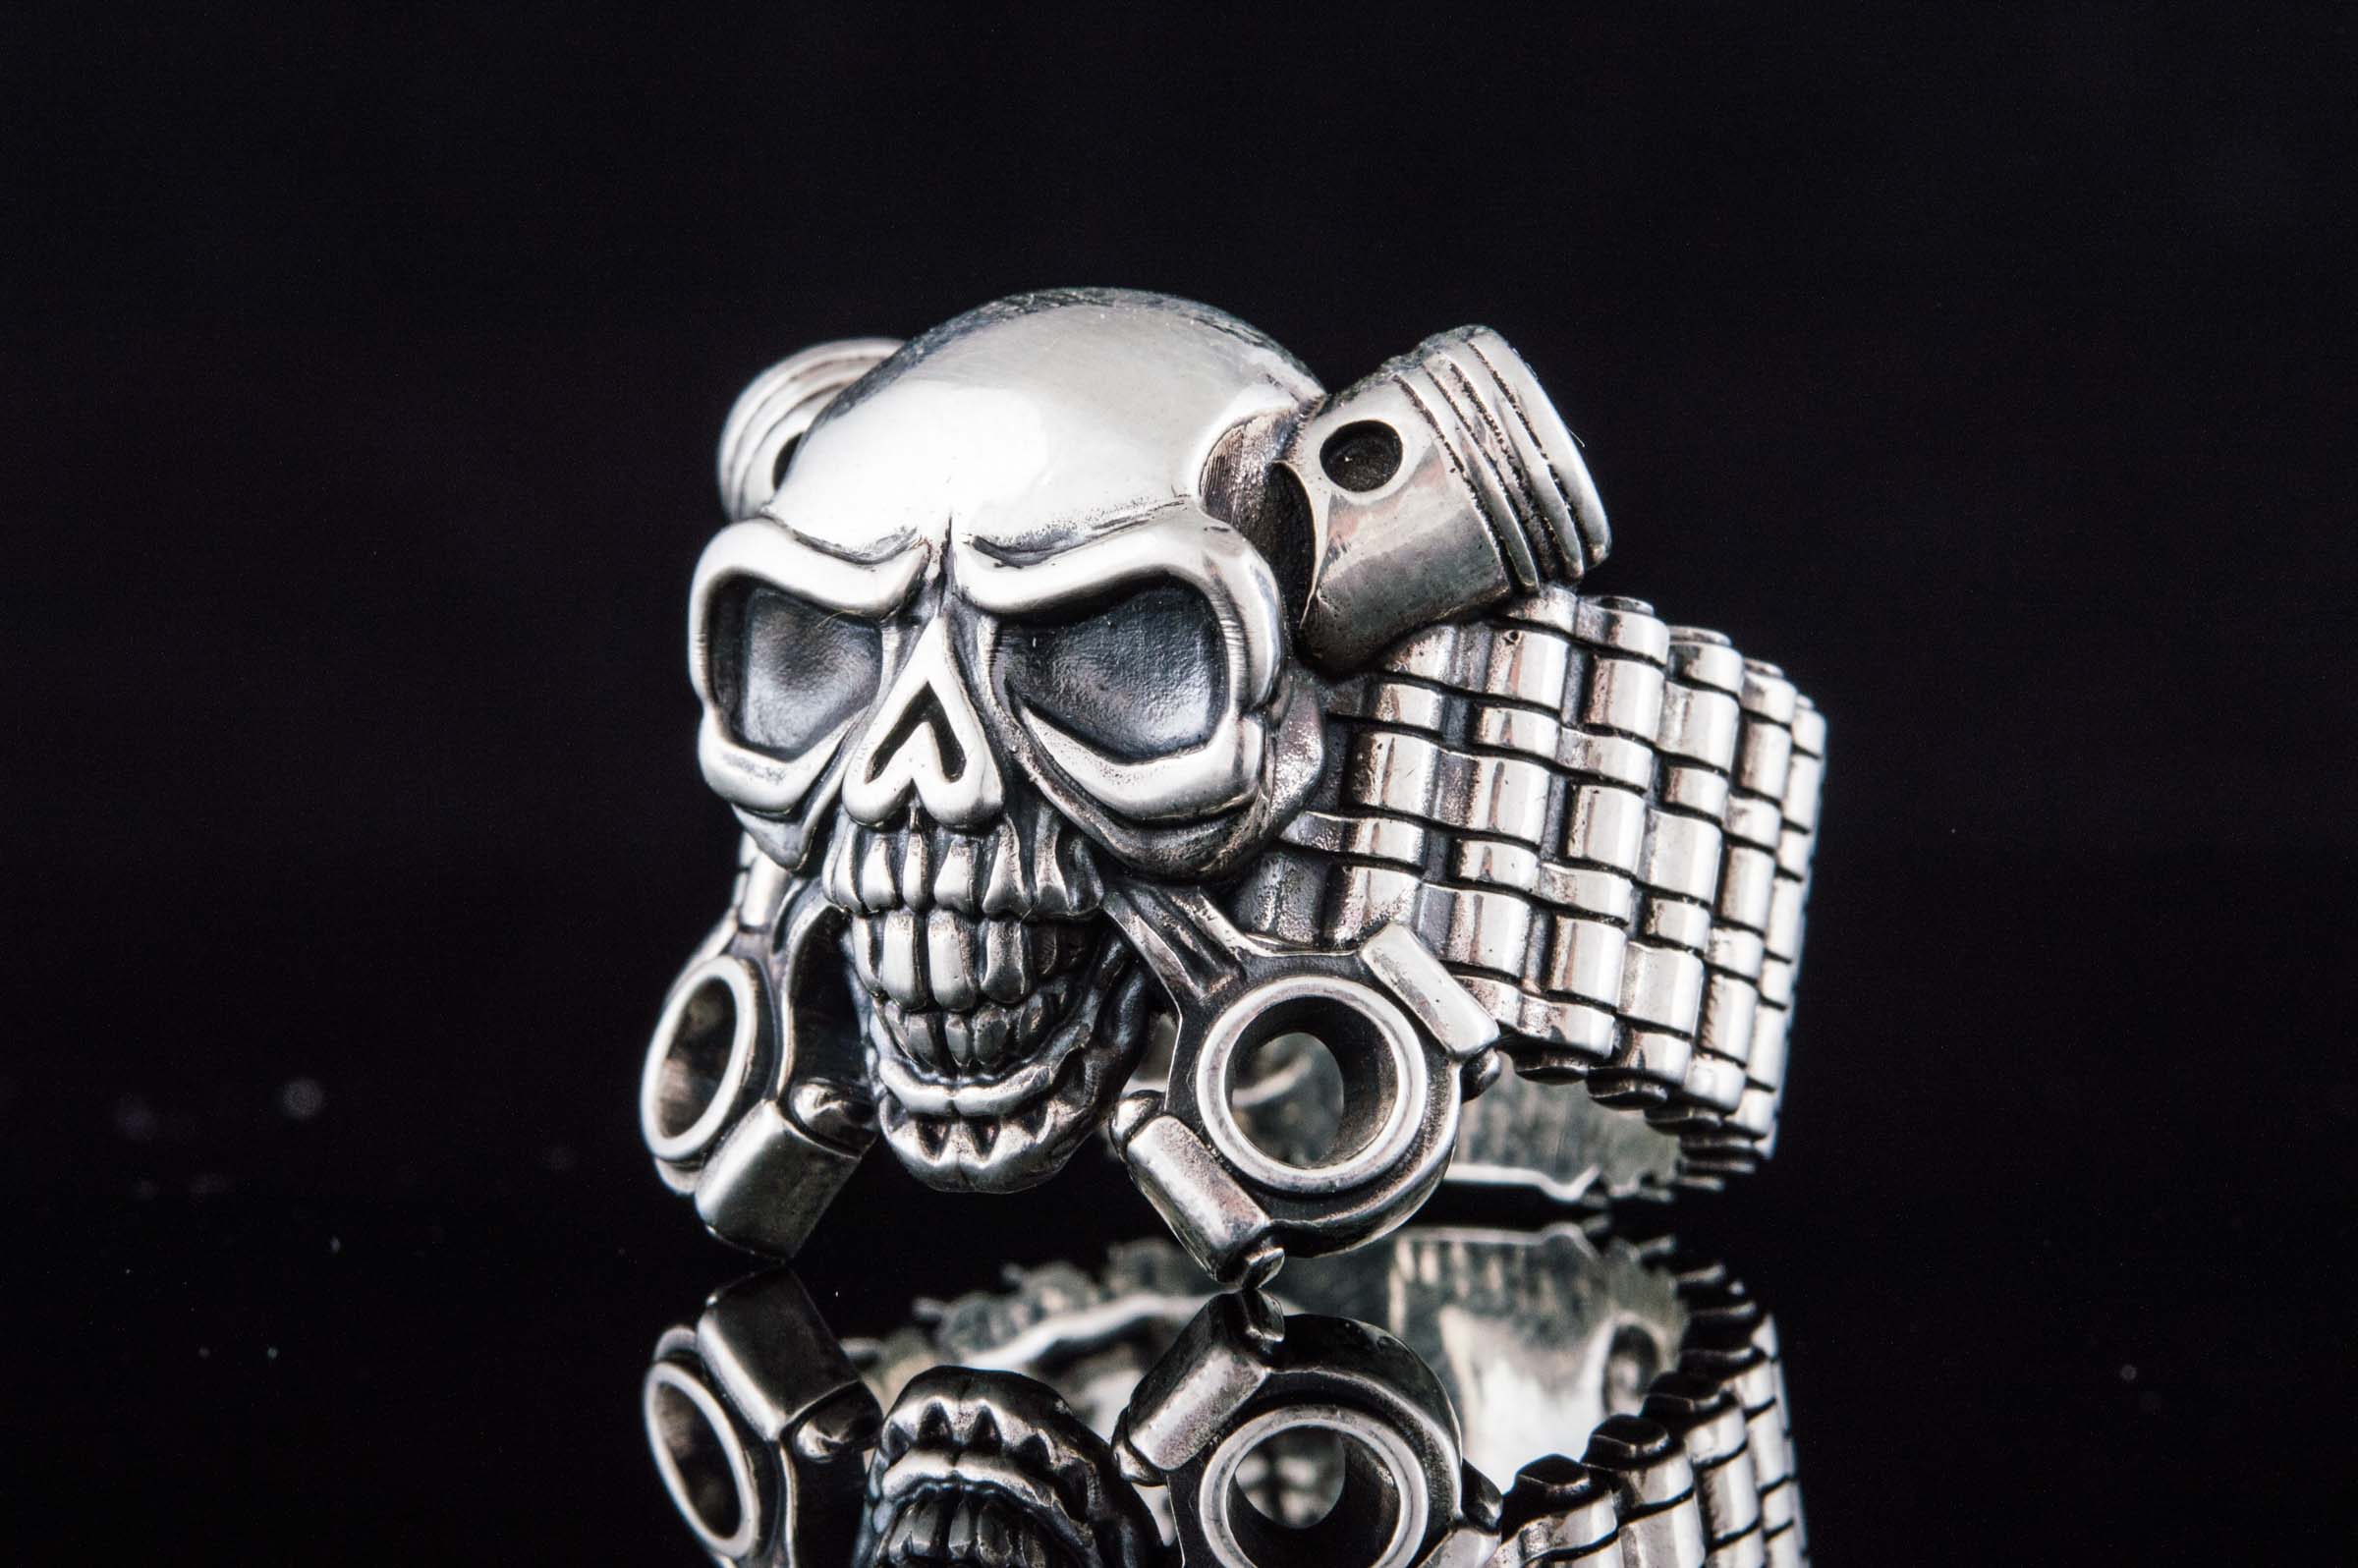 Biker Skull Ring Handmade Sterling SIlver Jewelry